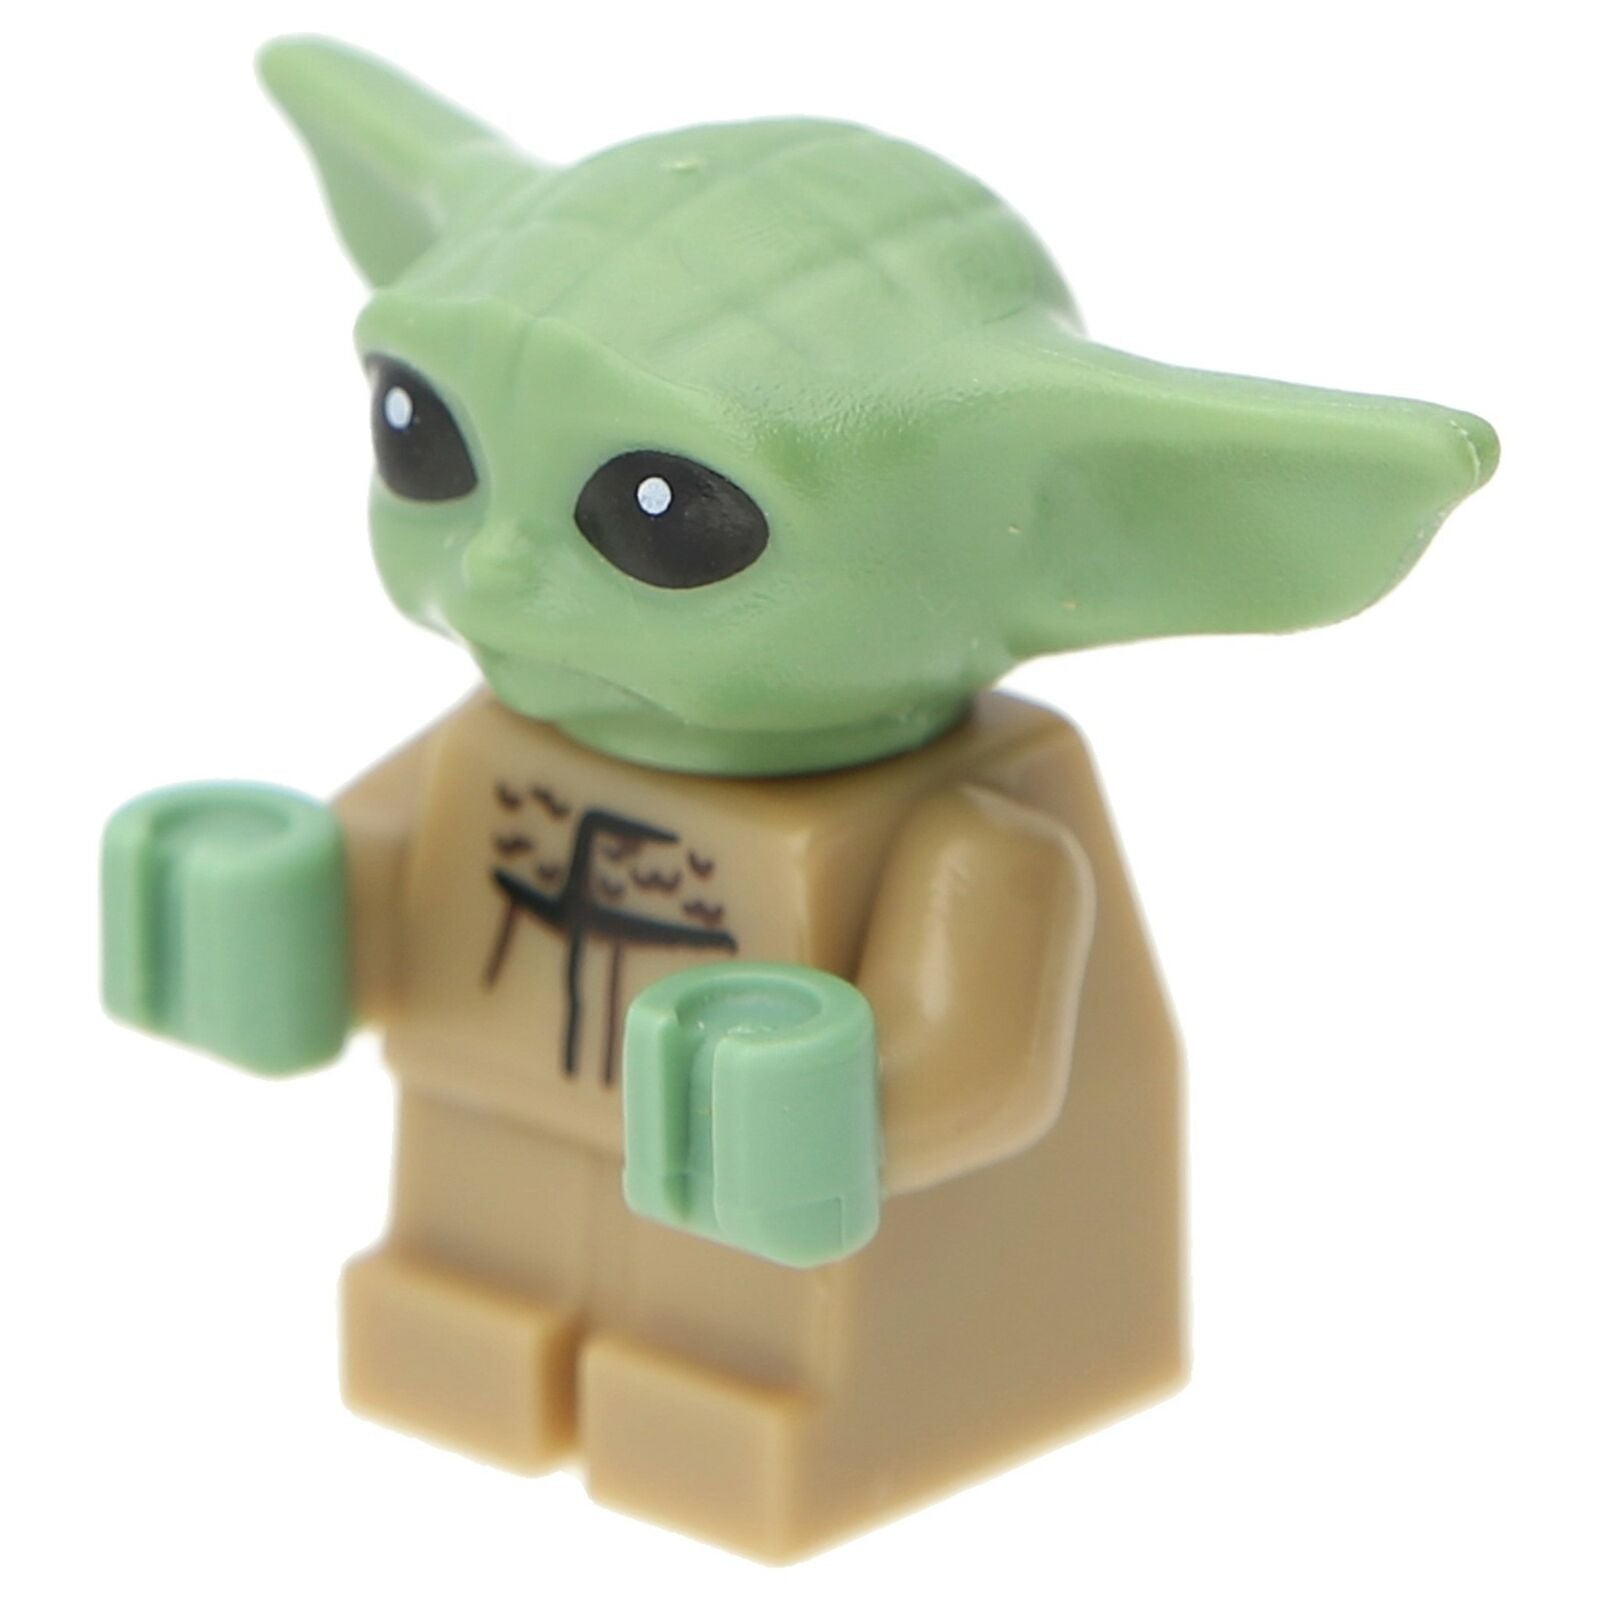 LEGO Star Wars Minifigure - Grogu (The Child)